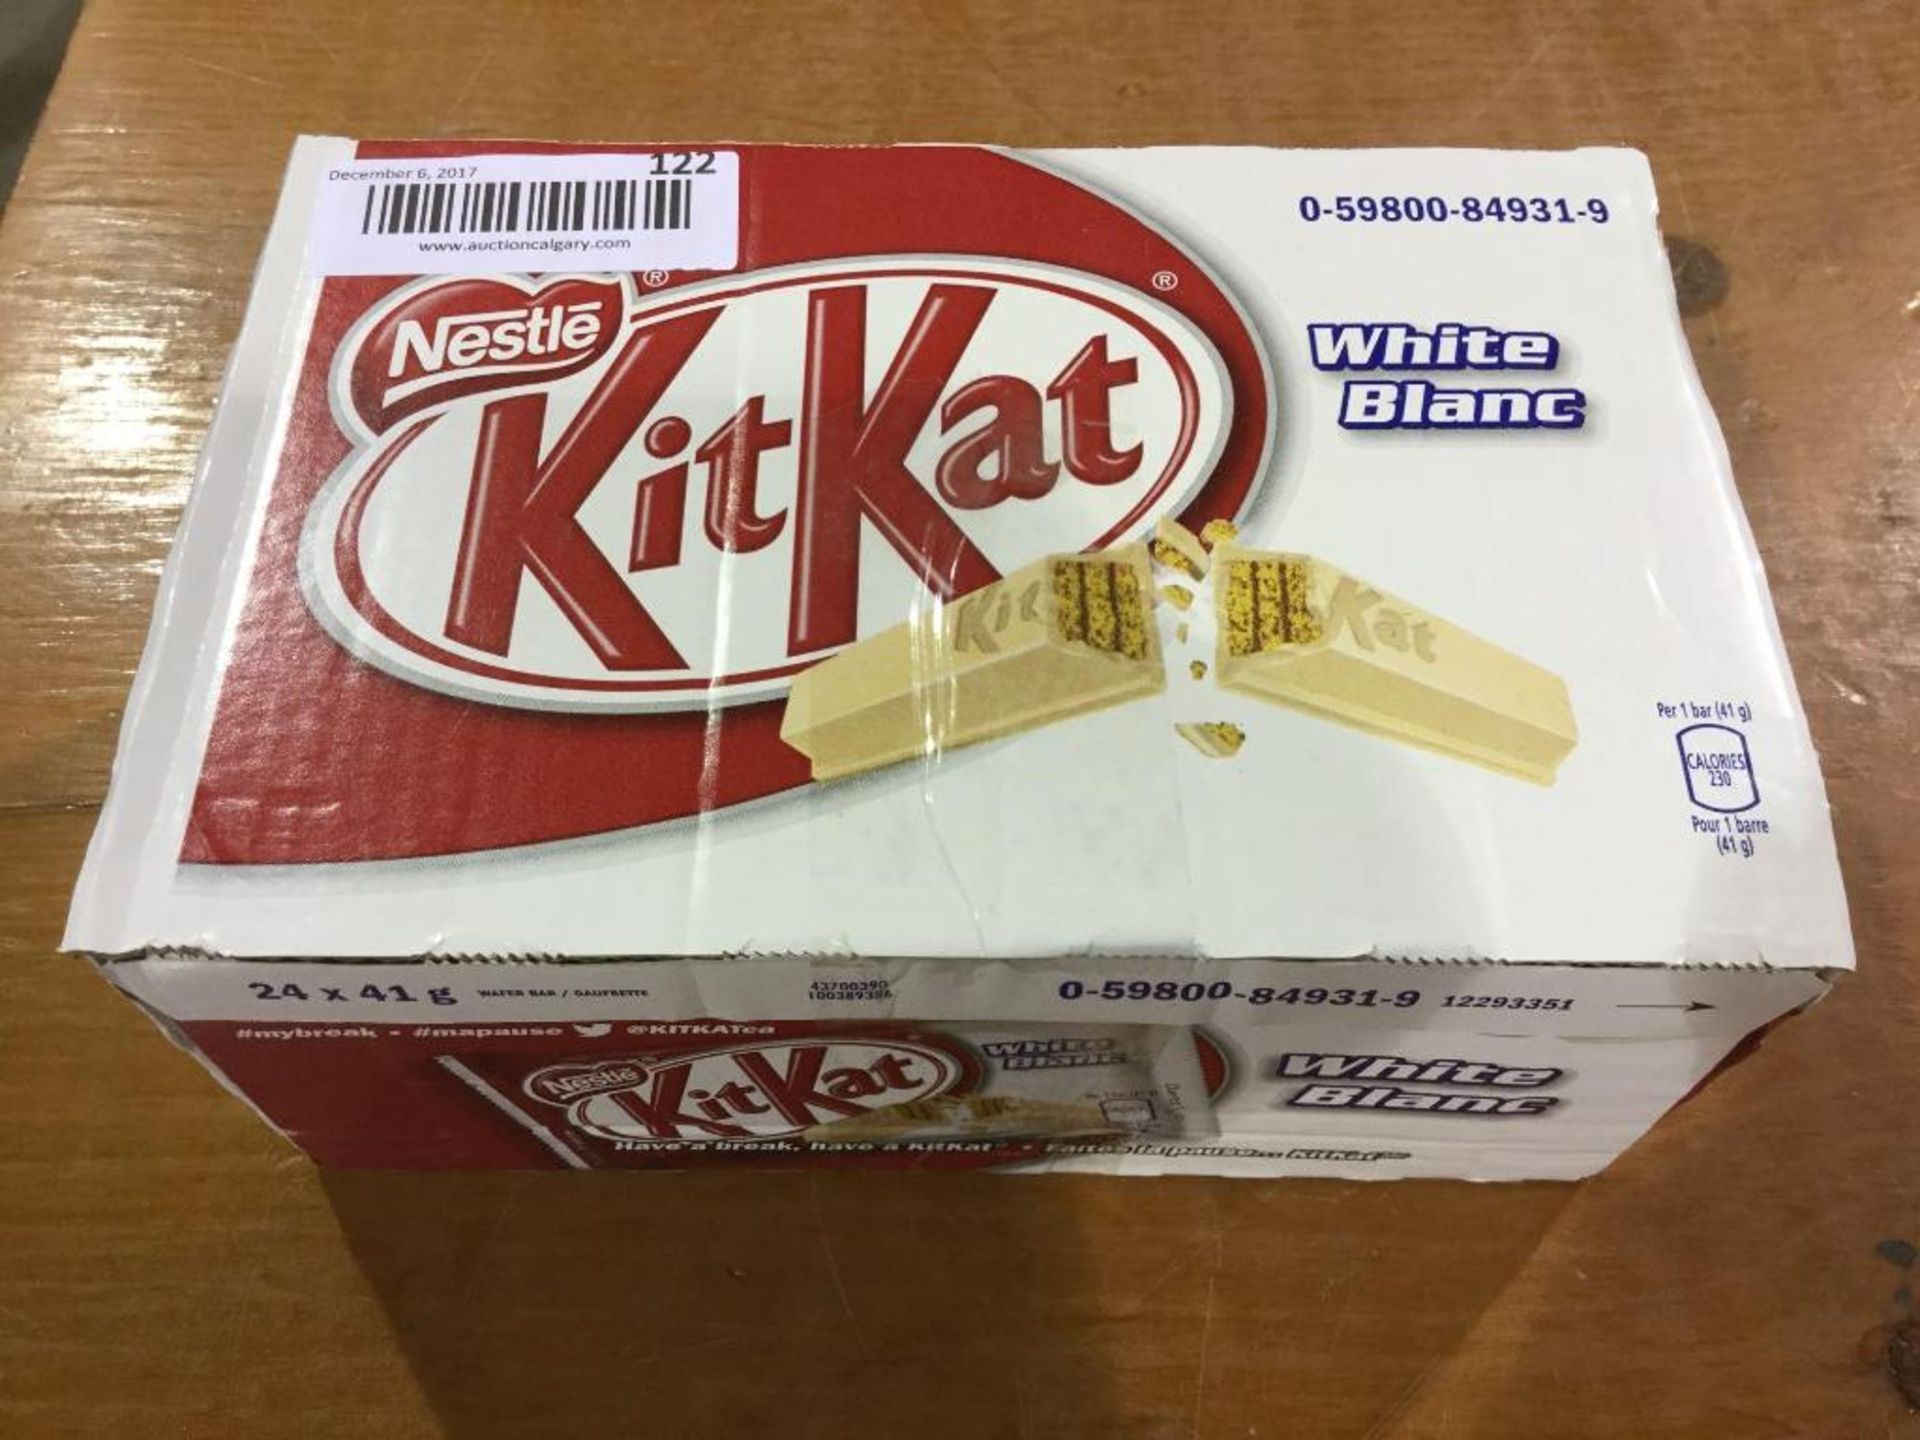 Case of 24 x 41 g White Chocolate KitKat's